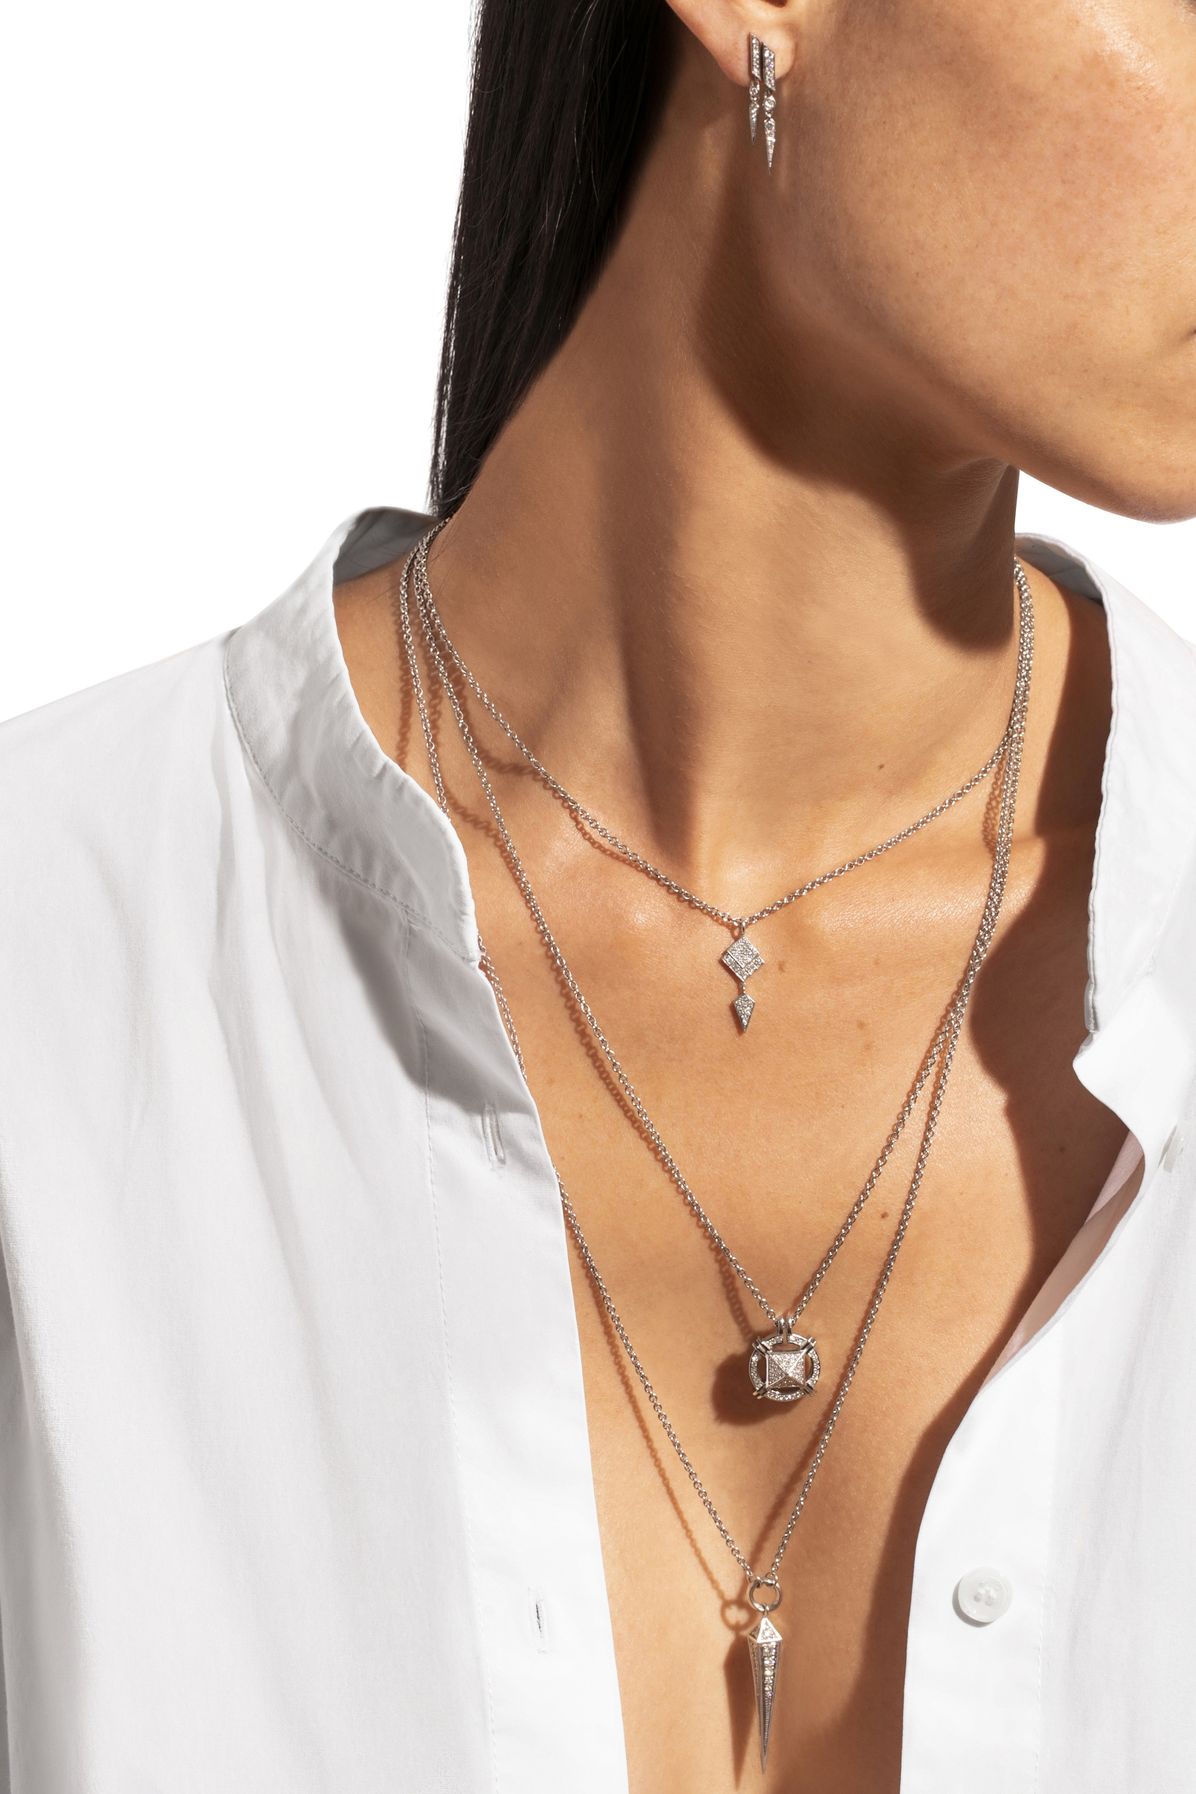  Lifeway pic diamond & silver necklace